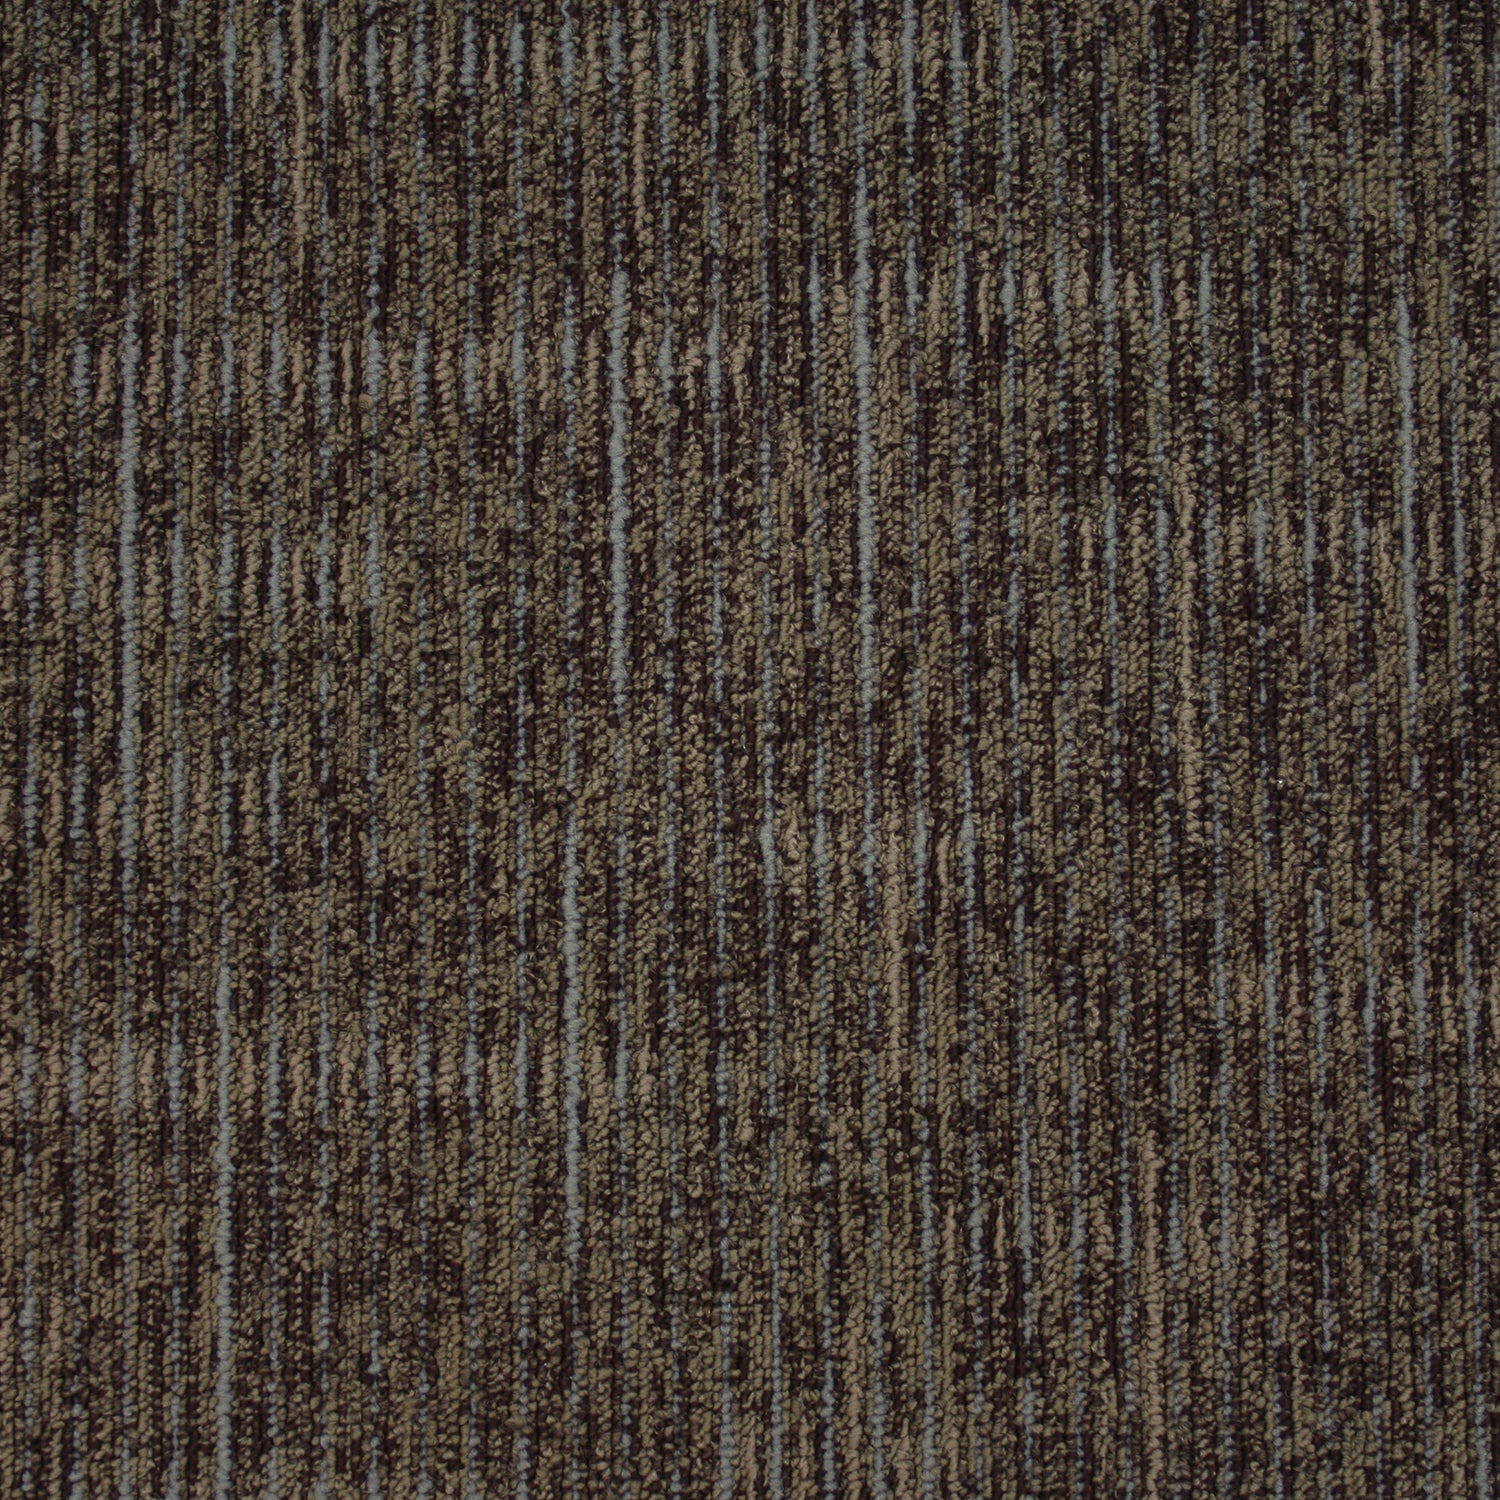 Kraus Carpet Tile Perspective Texture 724006